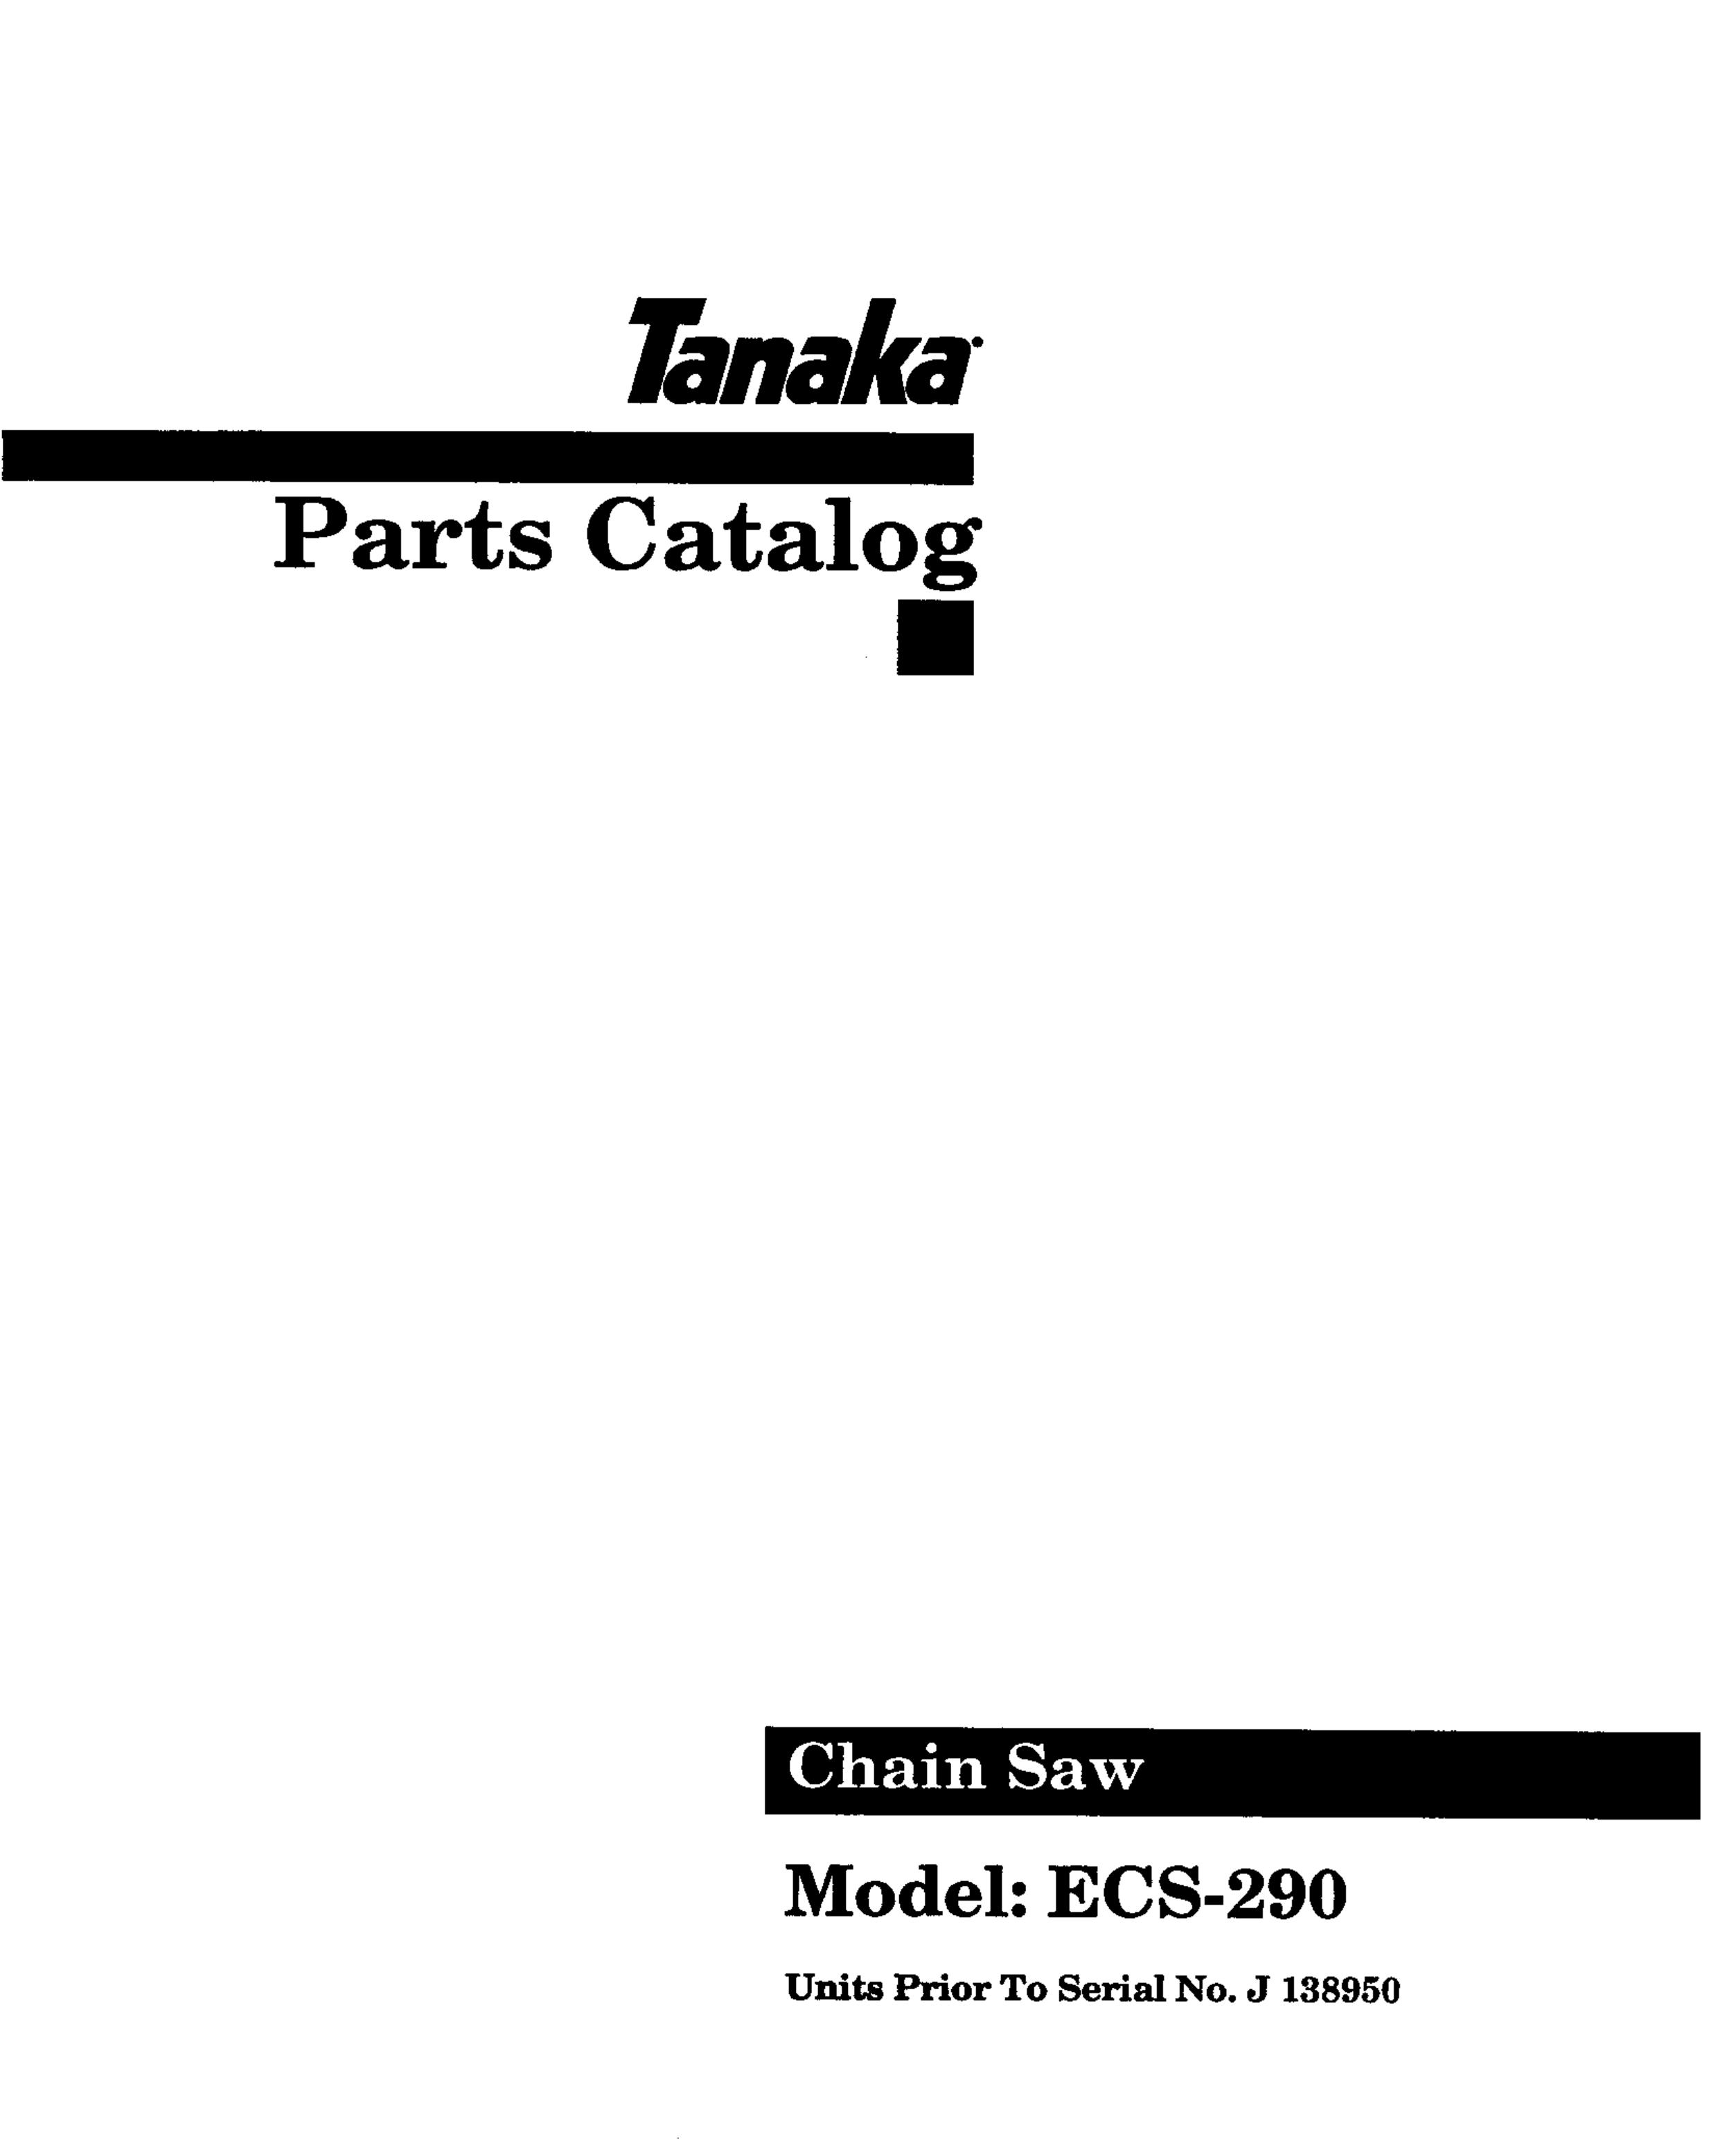 Tanaka ECS-290 Chainsaw User Manual